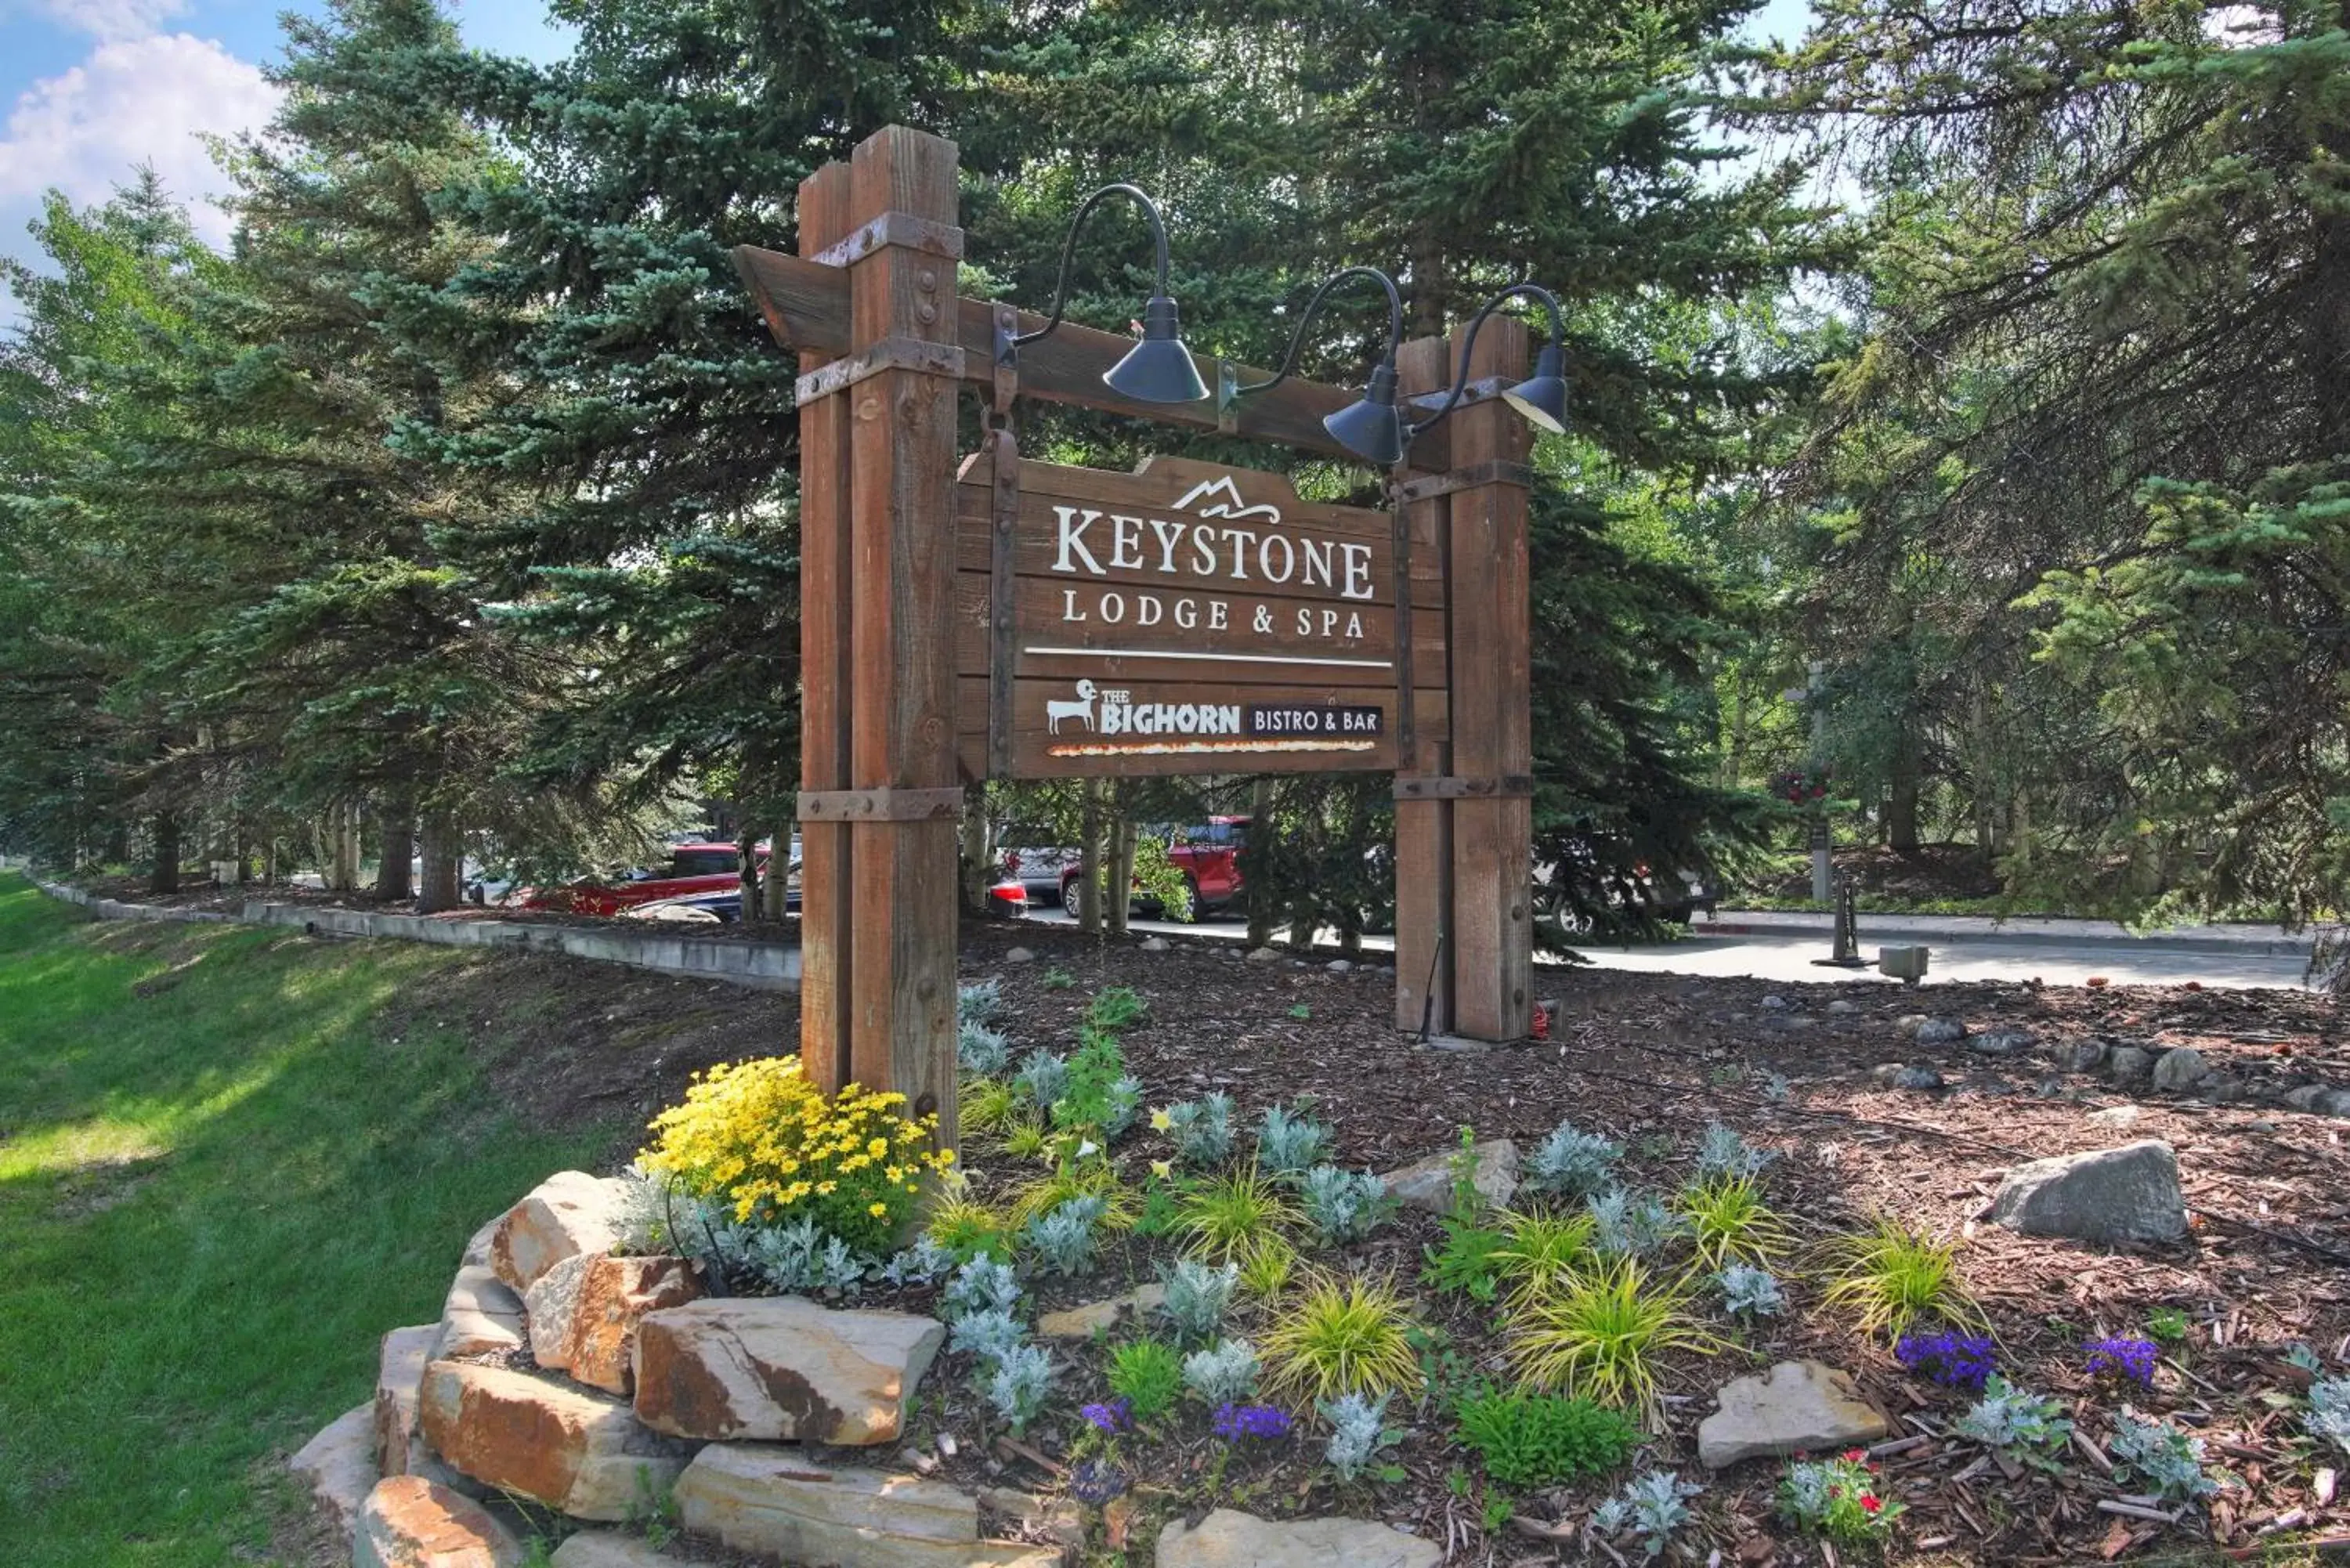 The Keystone Lodge and Spa by Keystone Resort